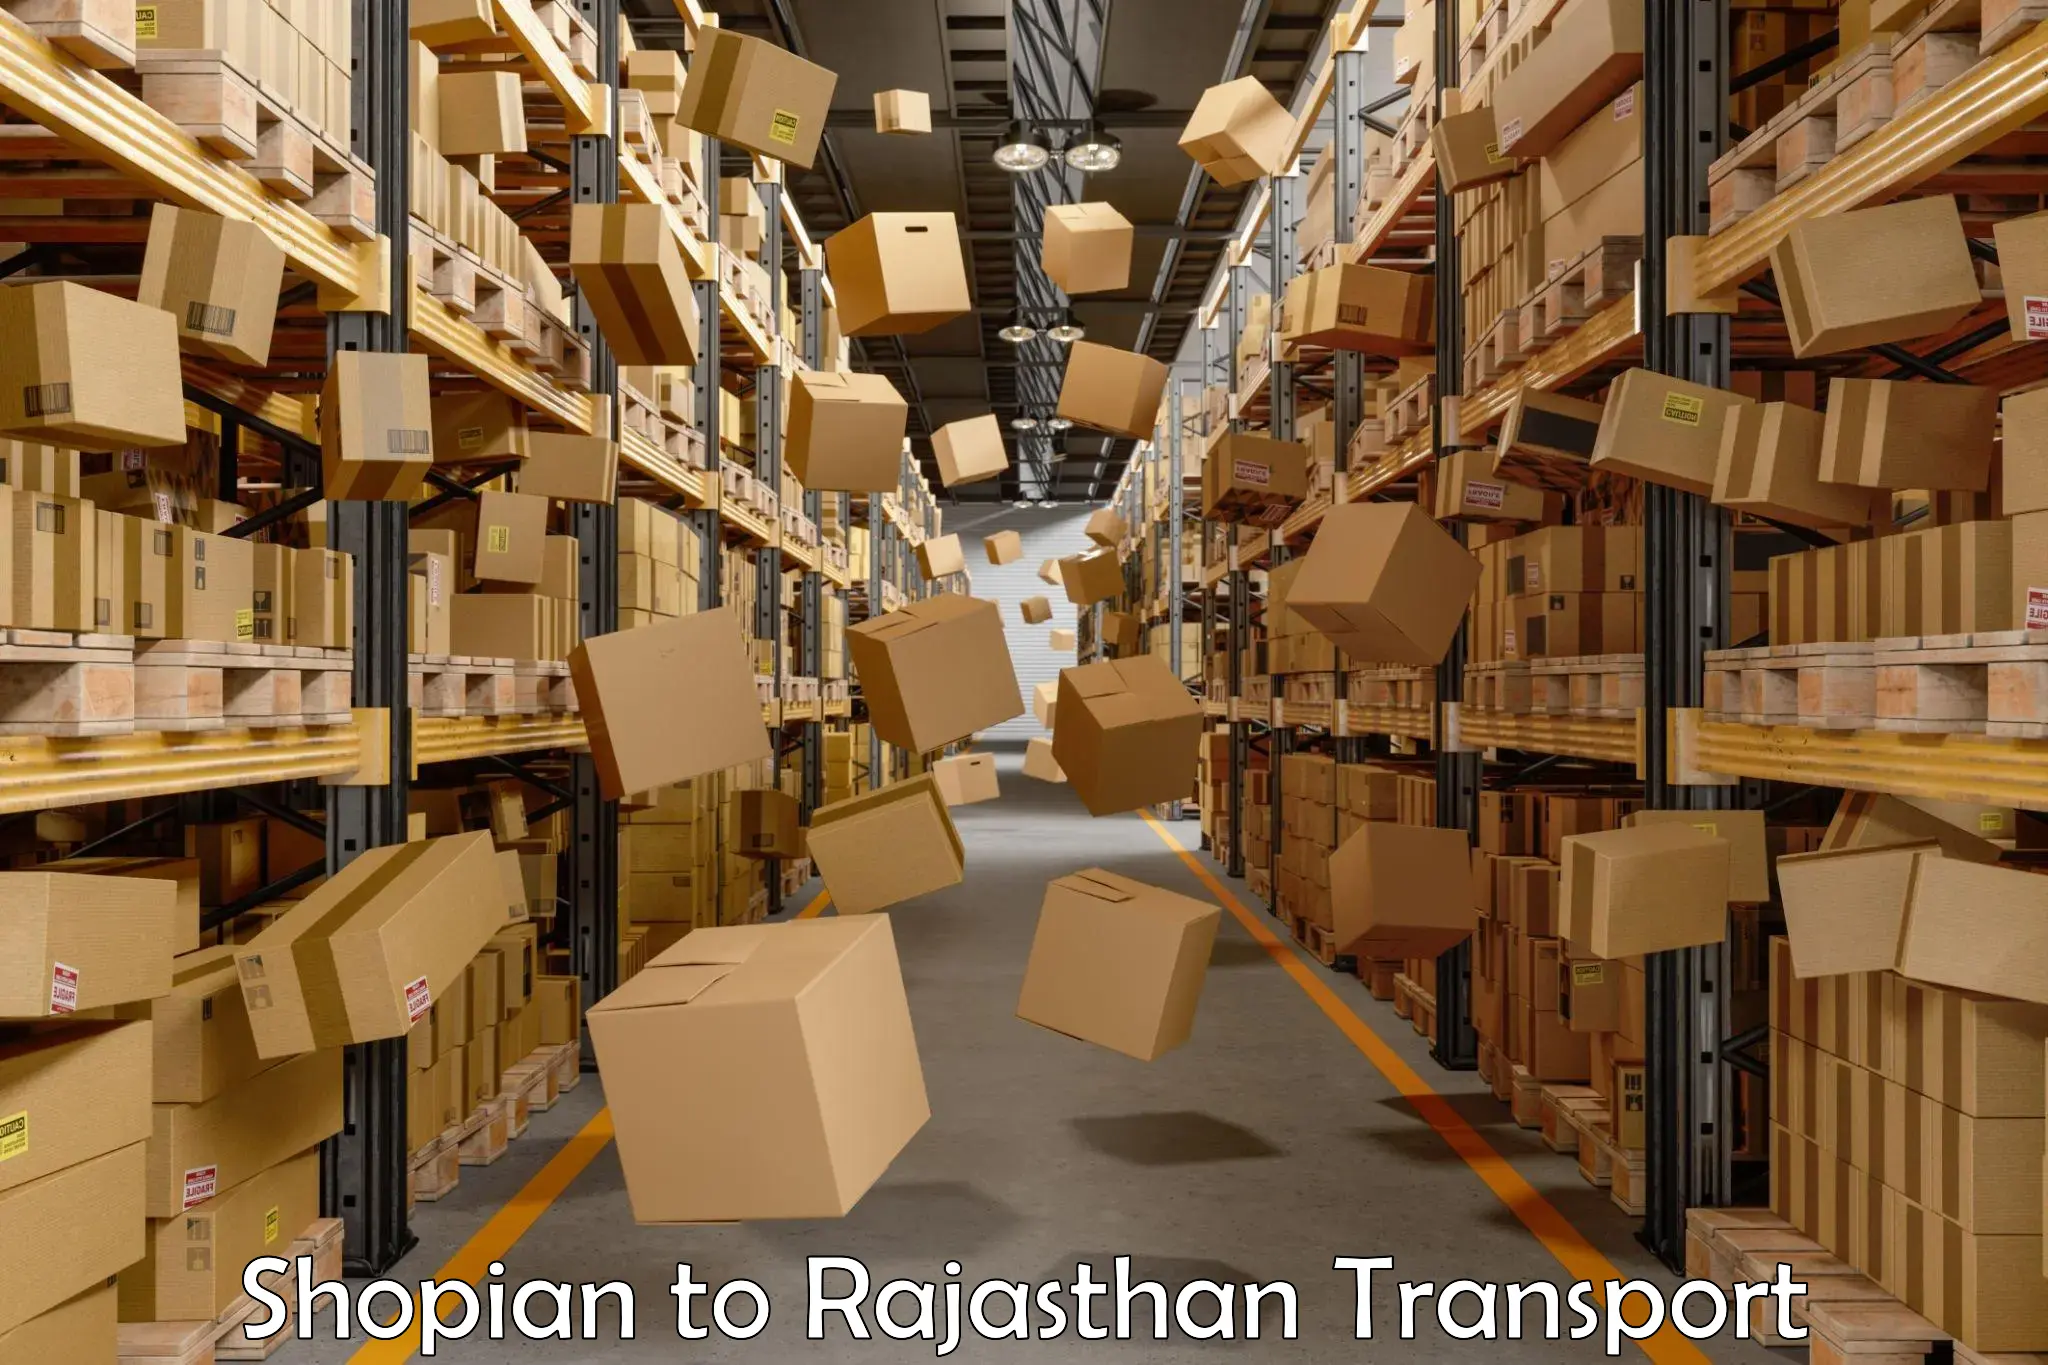 Bike transport service Shopian to Rajasthan